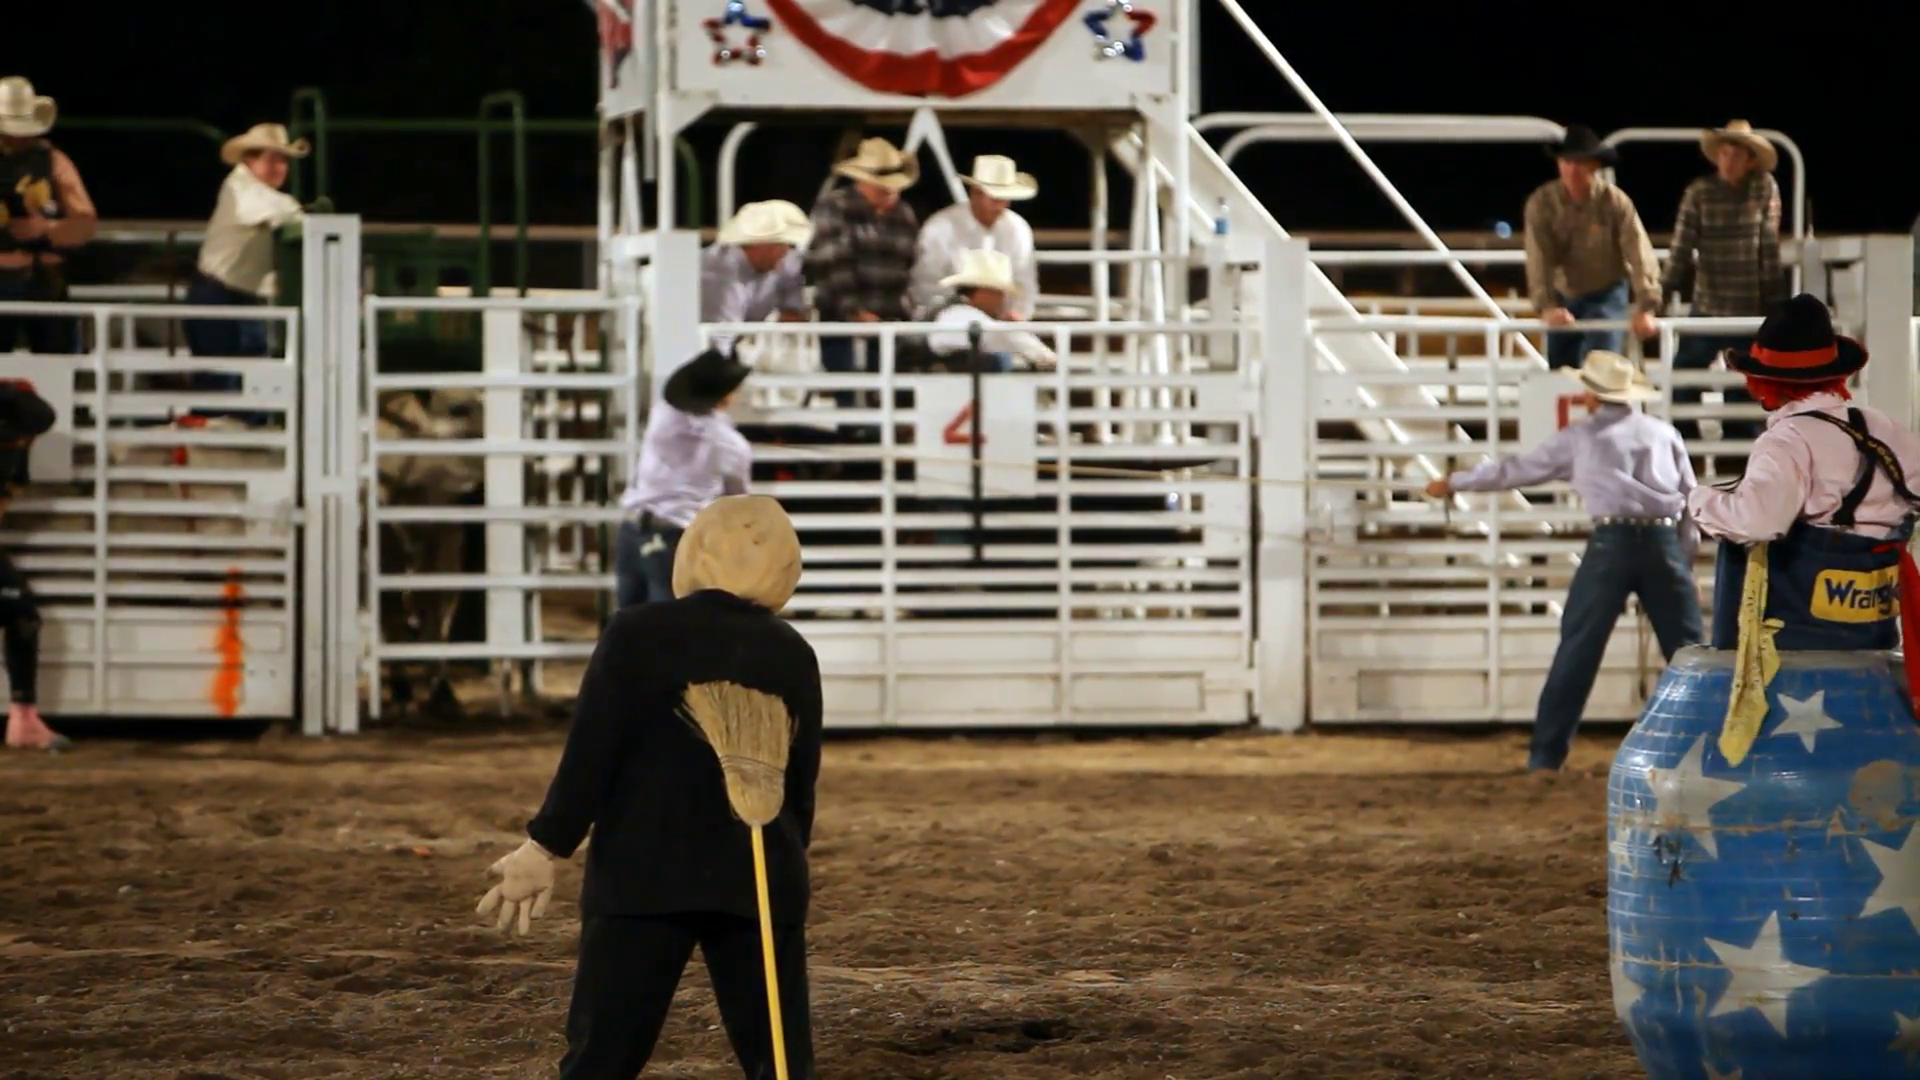 Rodeo bull ride night rural t